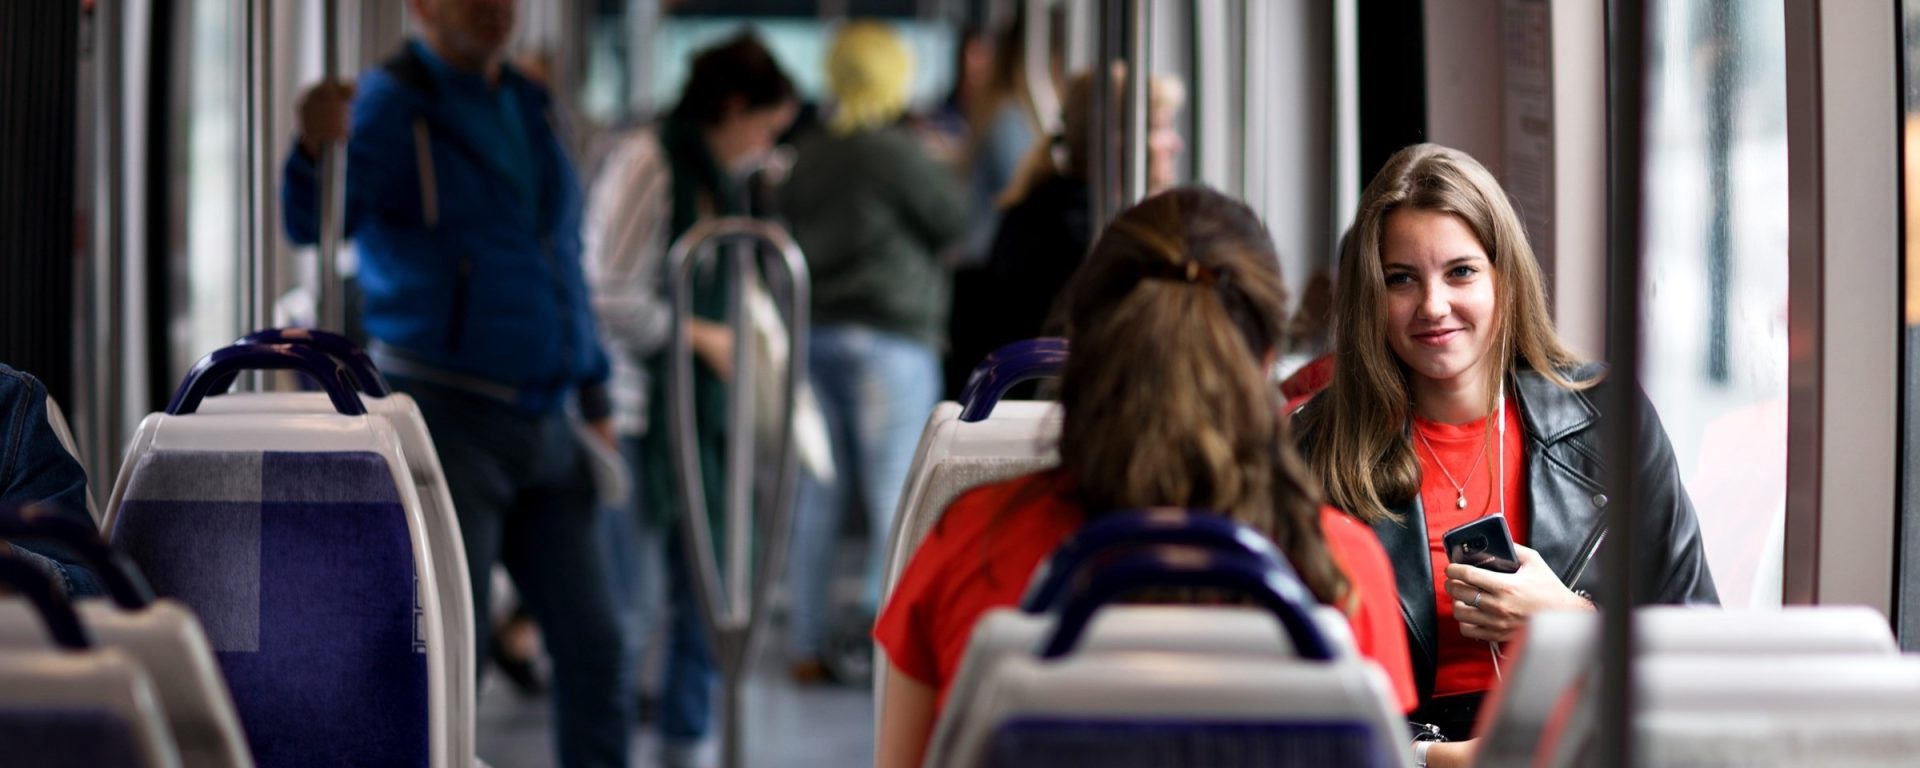 Transdev tramway streetcar passagers passengers transport public transit mobility compagny mobilité voyageurs travelers